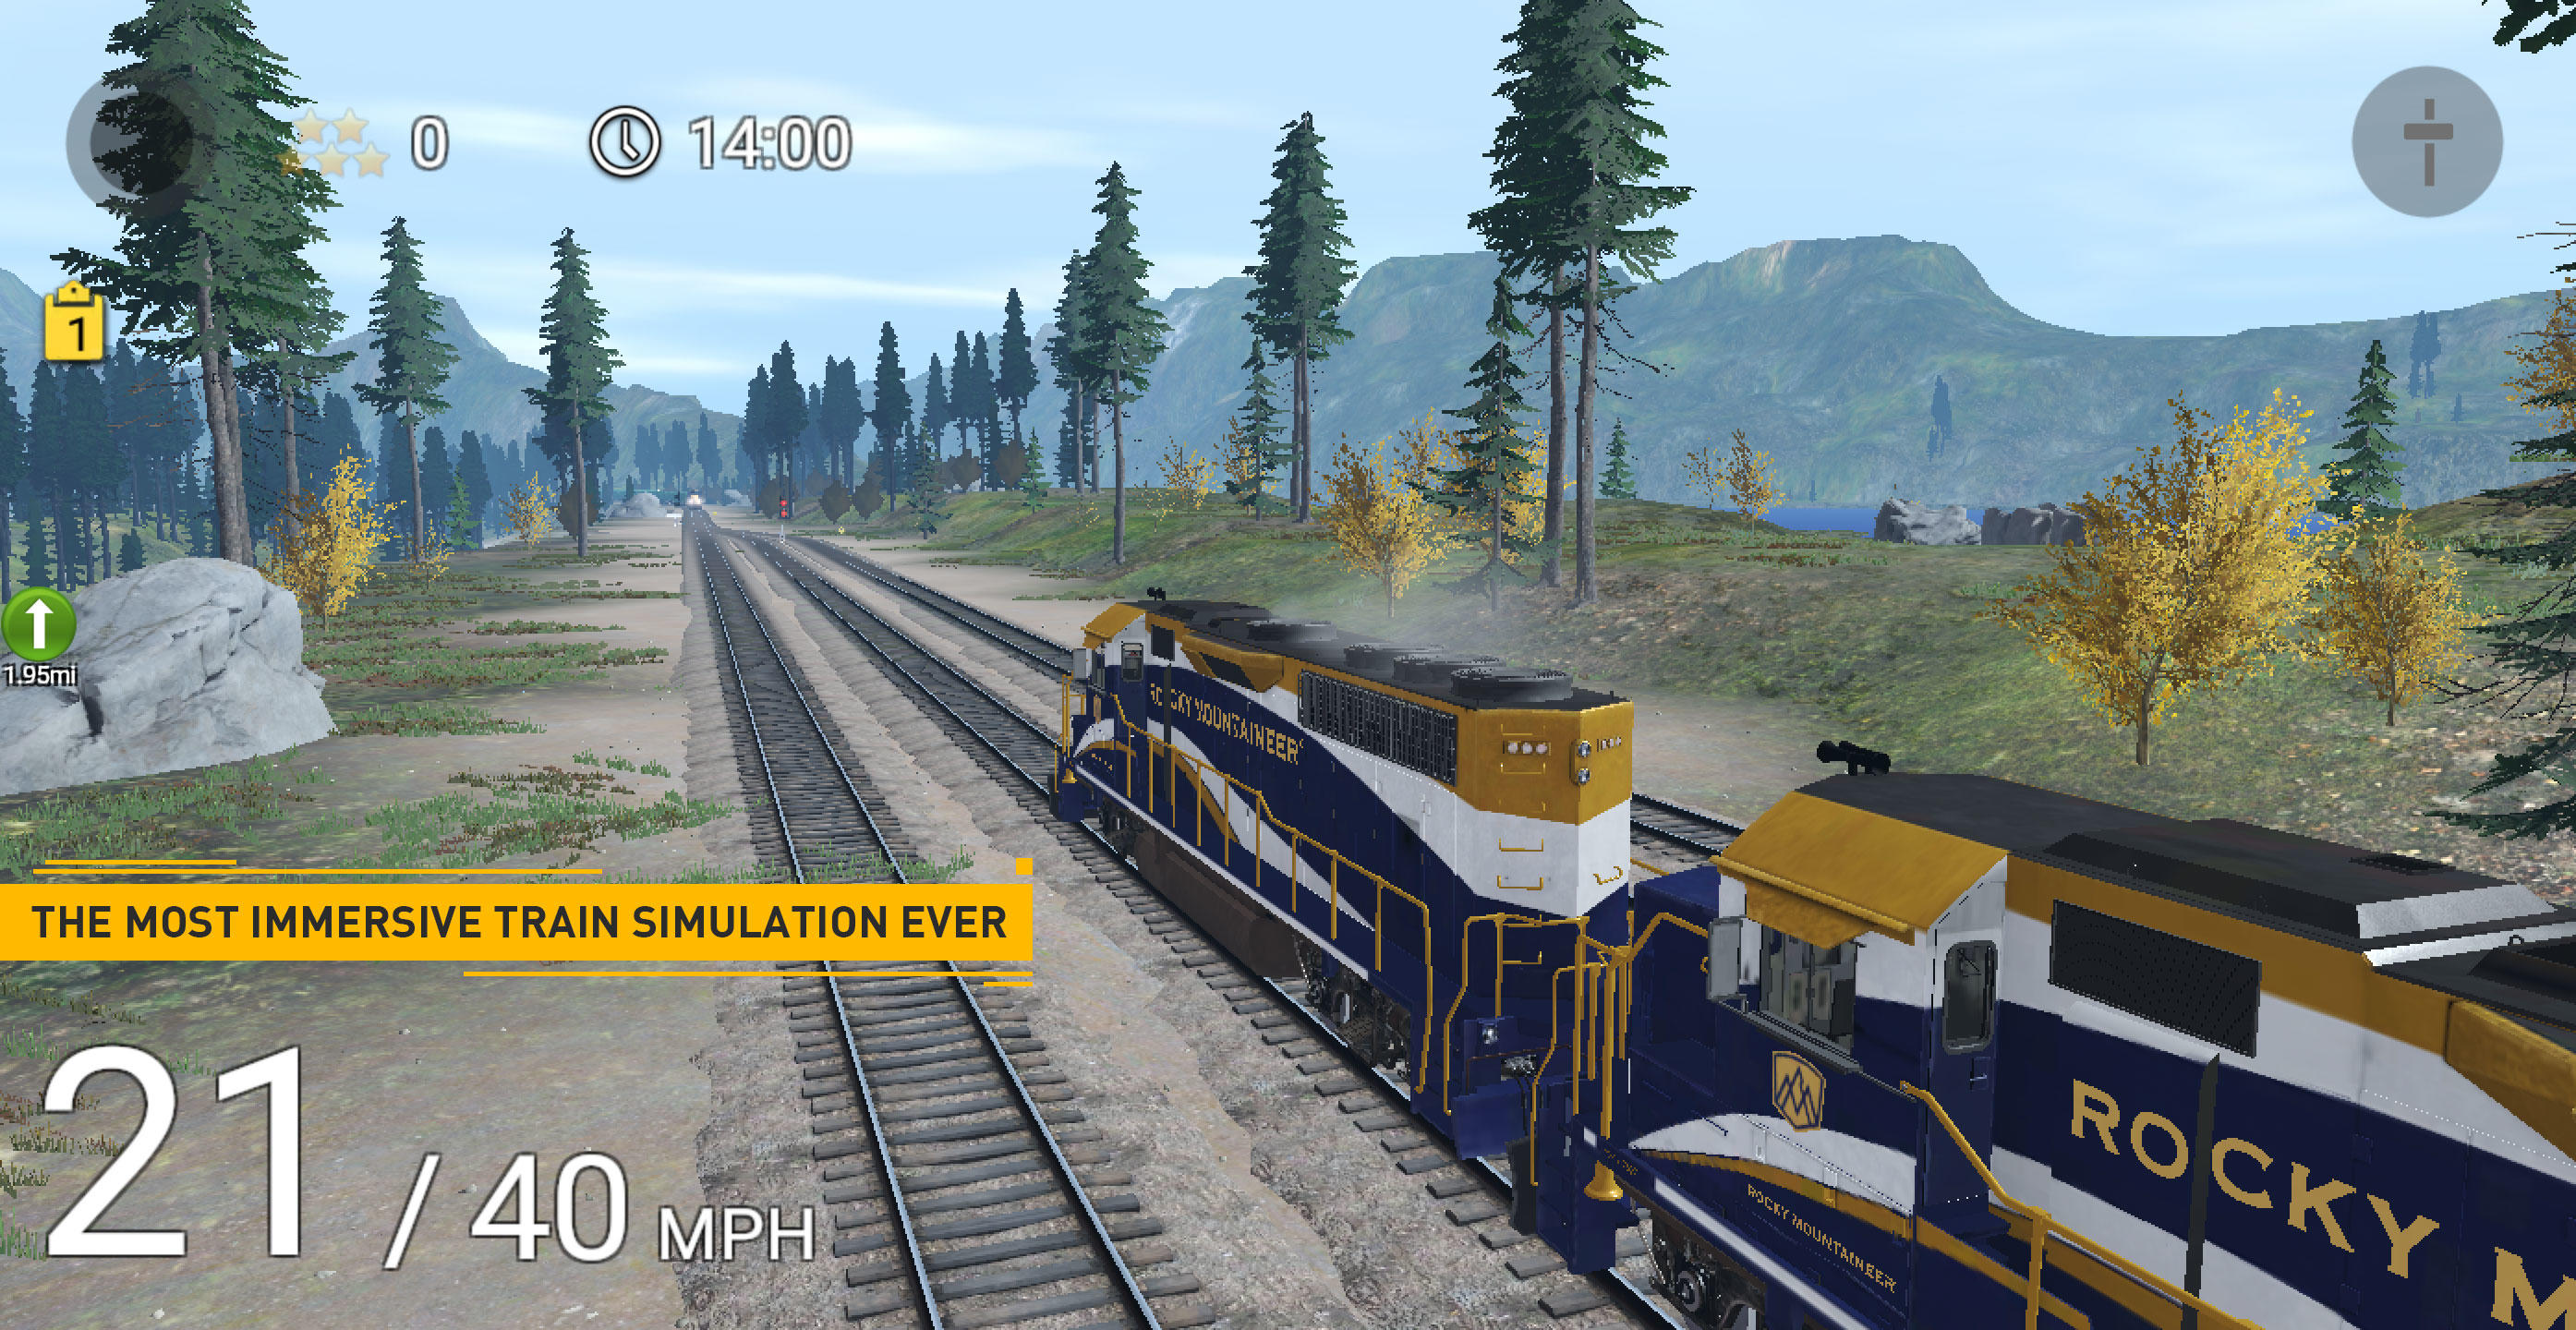 trainz simulator 12 apk